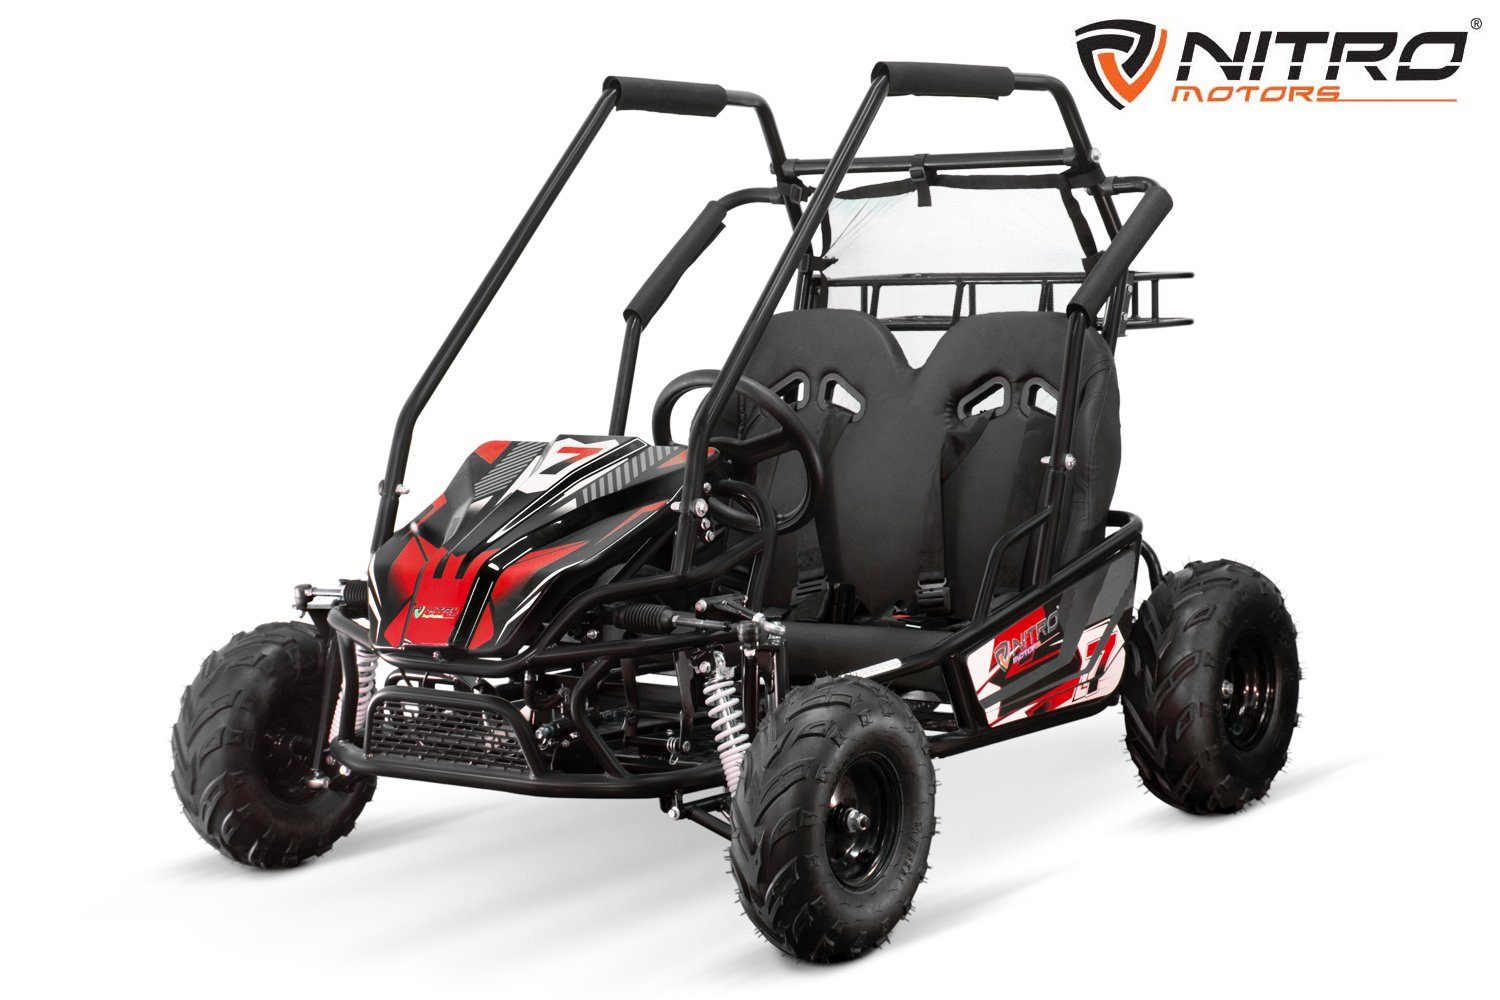 Nitro Motors Quad Gokart 212cc Automatik midi Kinder Buggy Forest PRM Quad ATV, 212,00 ccm Rot